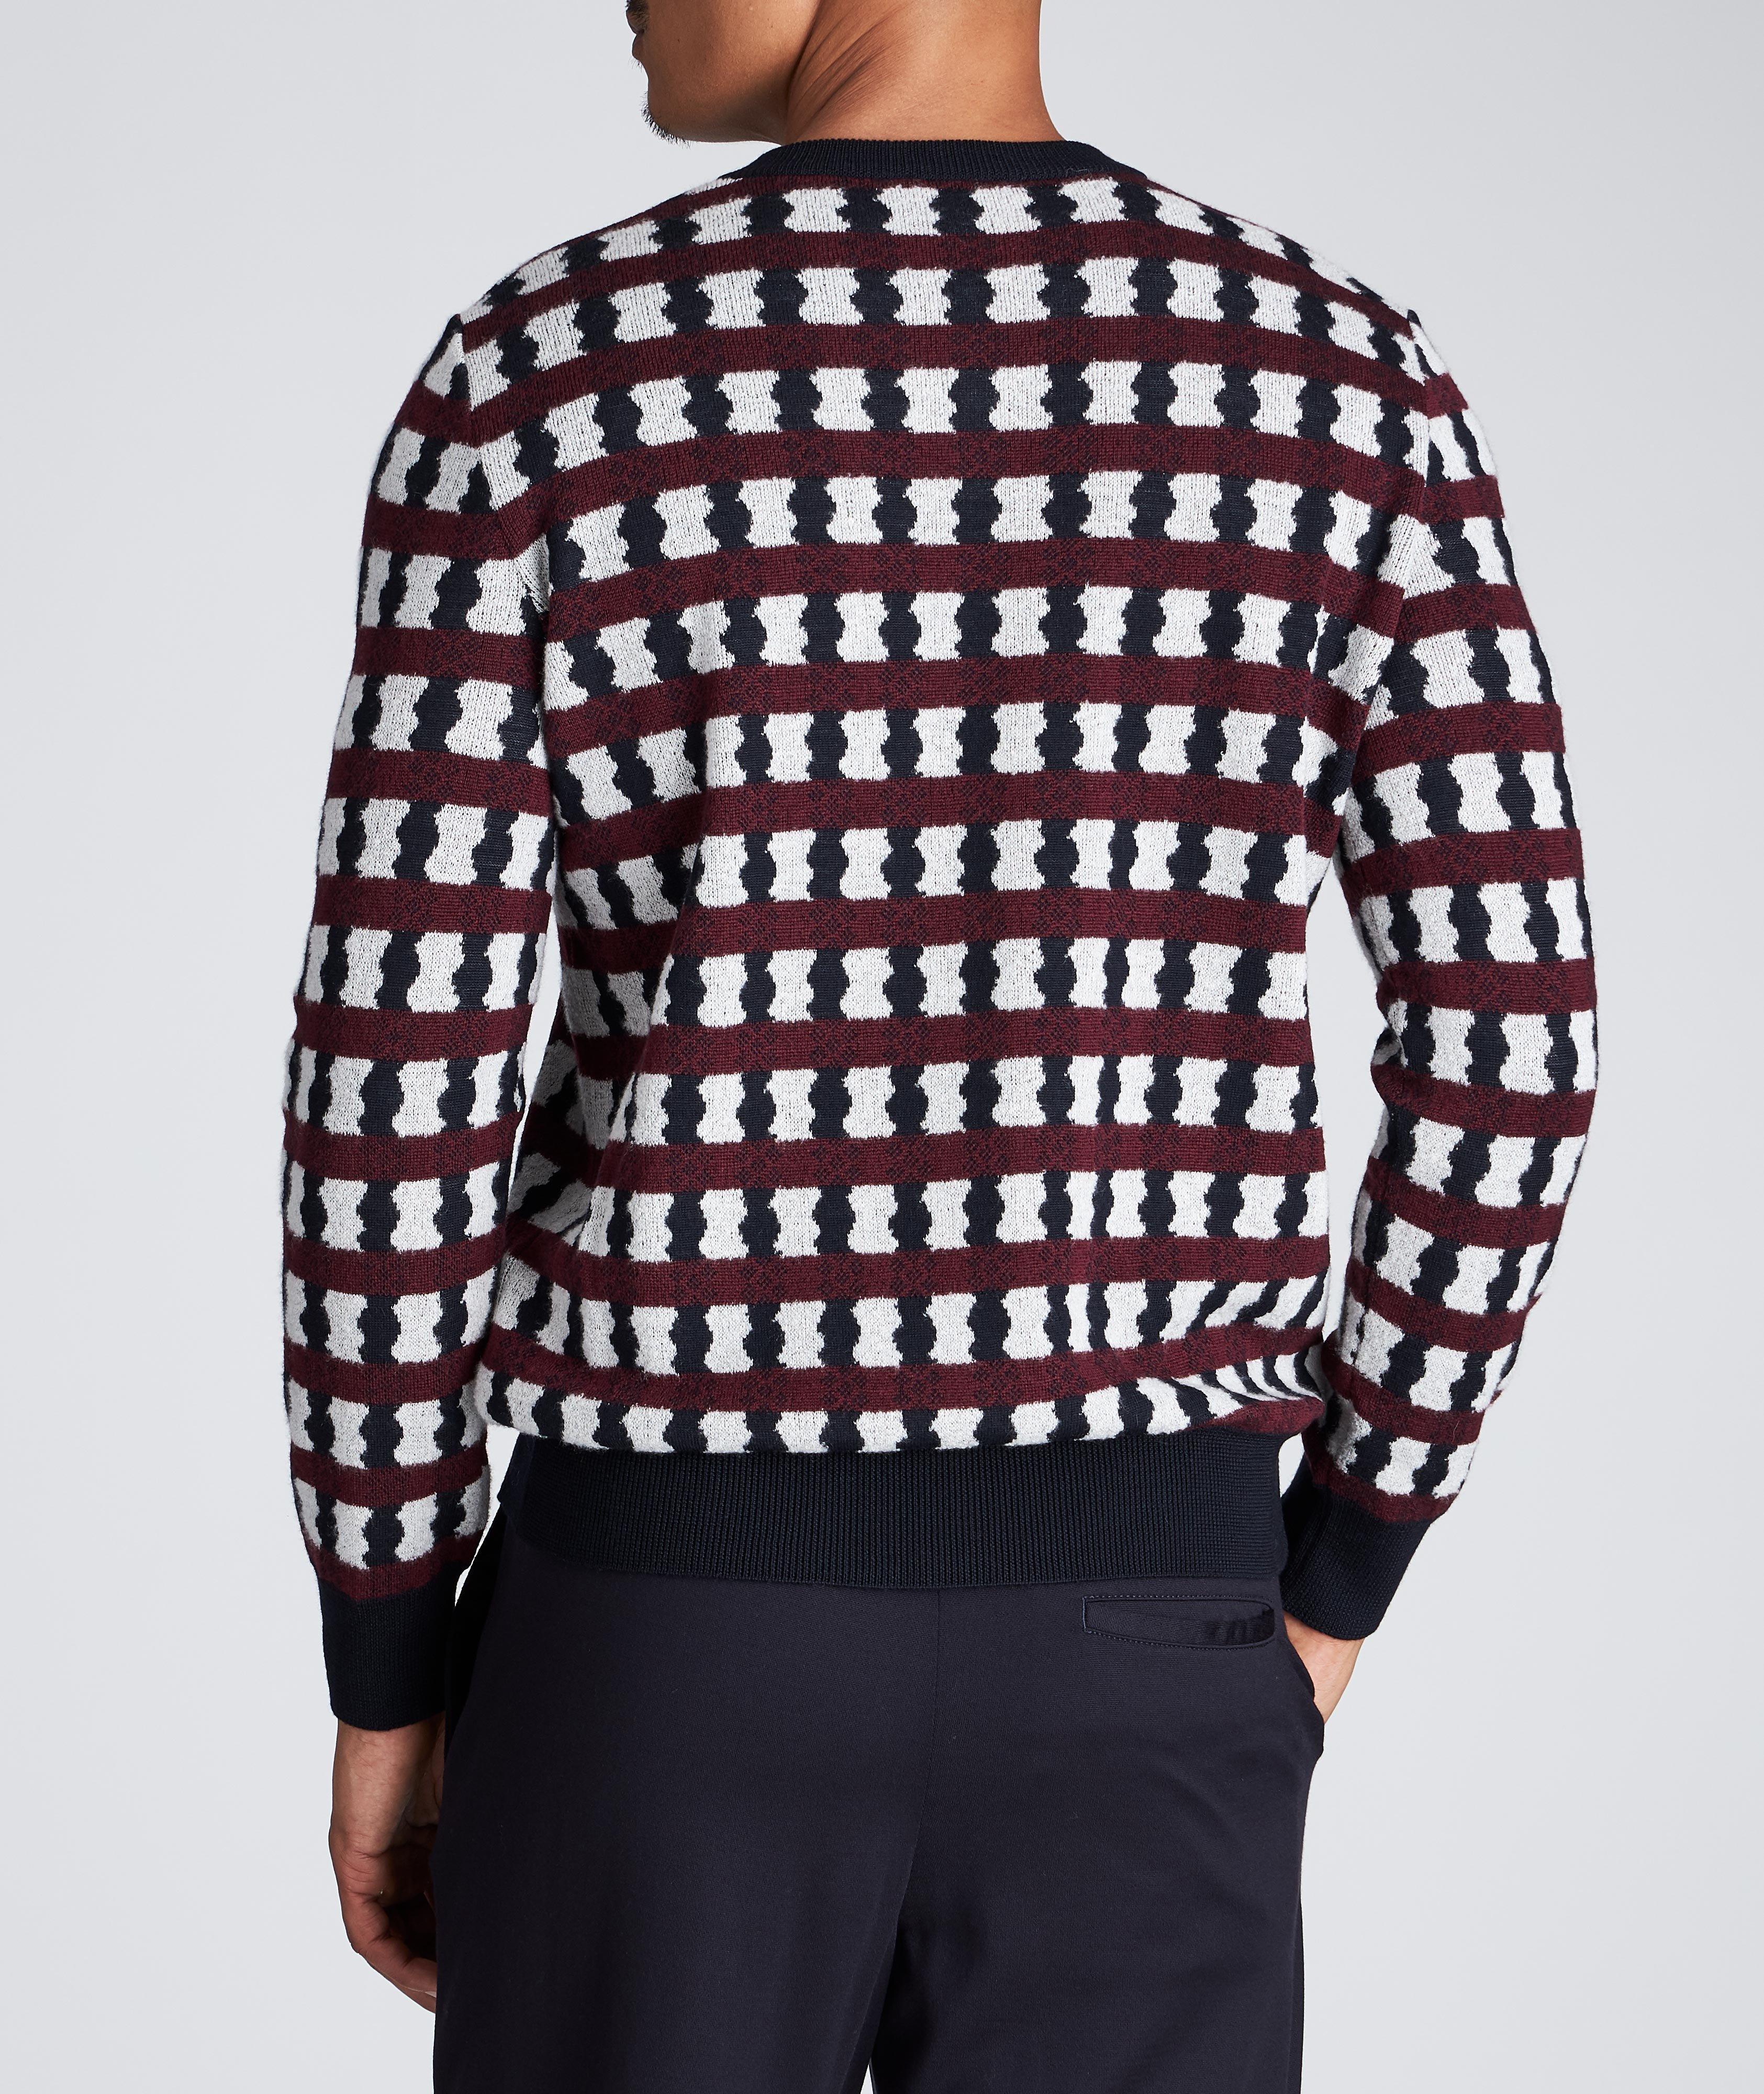 Geometric Print Wool, Cashmere & Silk Sweater image 2